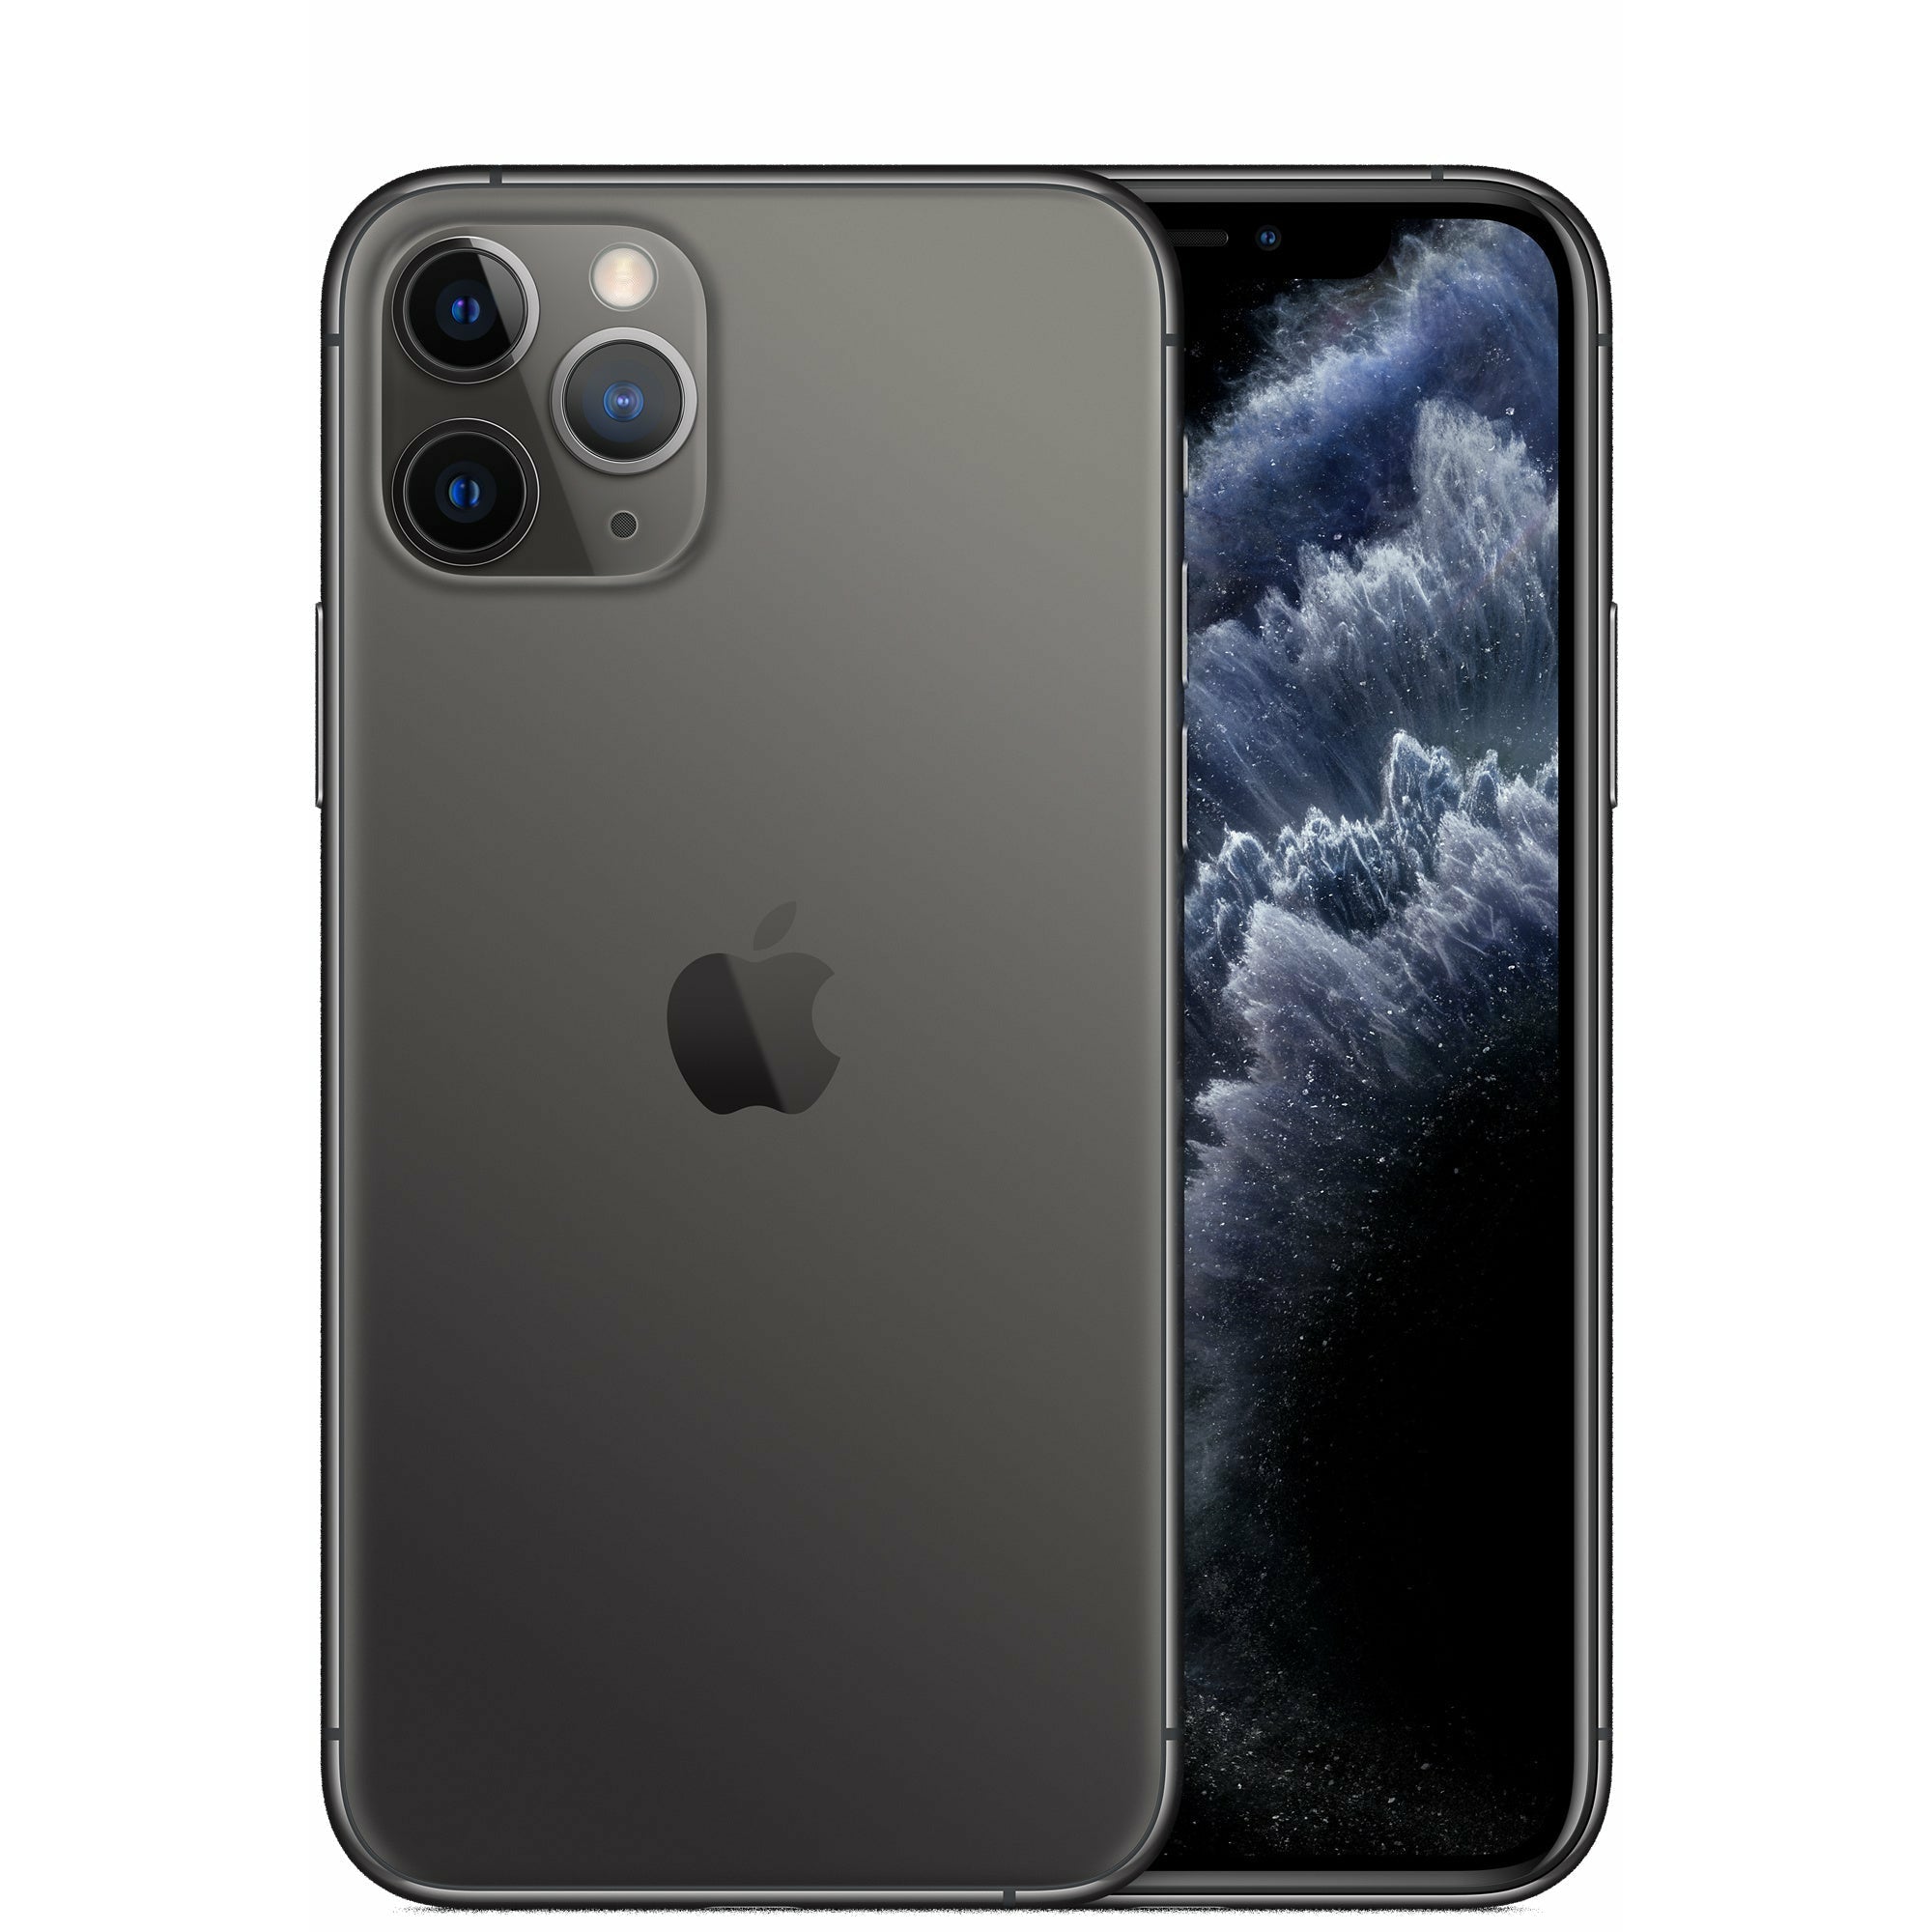 Apple iPhone 11 Pro 64GB Unlocked (Space Gray)